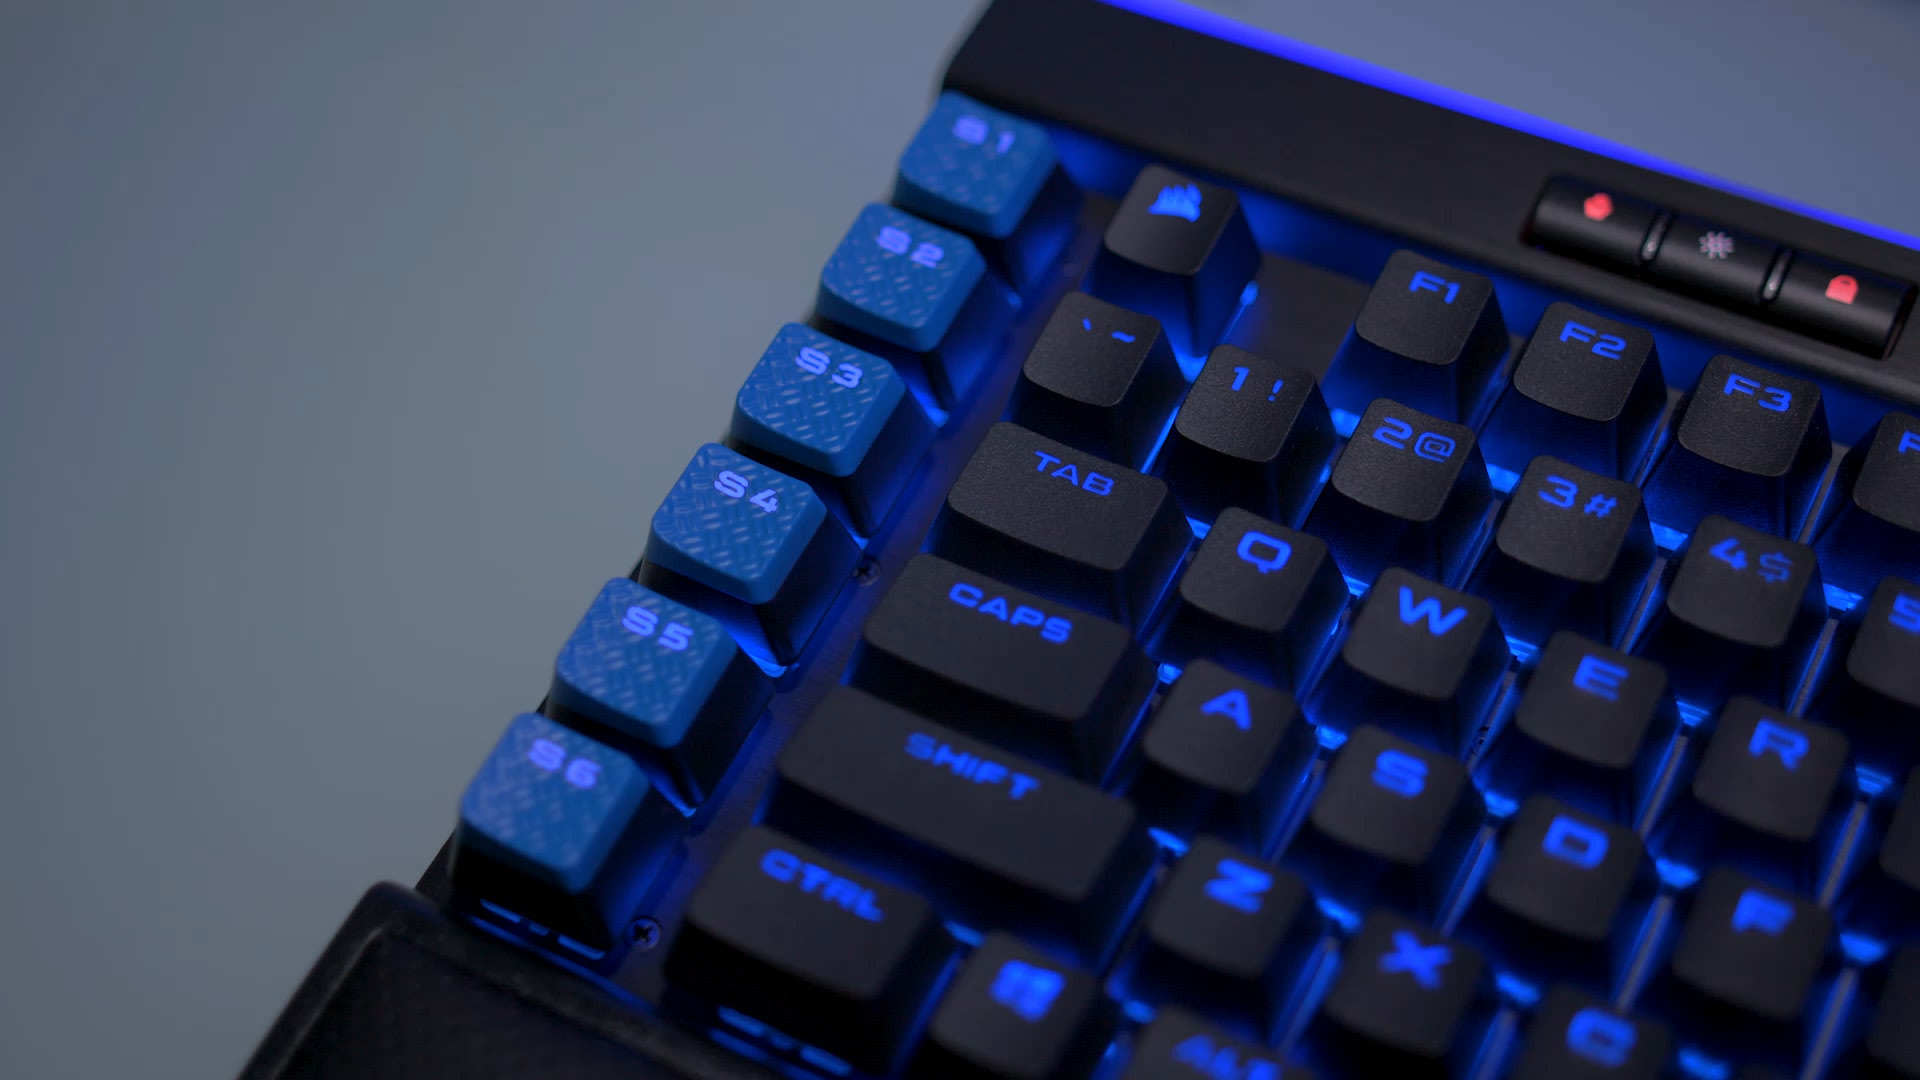 K95 PLATINUM XT Mechanical Gaming Keyboard — CHERRY® MX SPEED Layout)